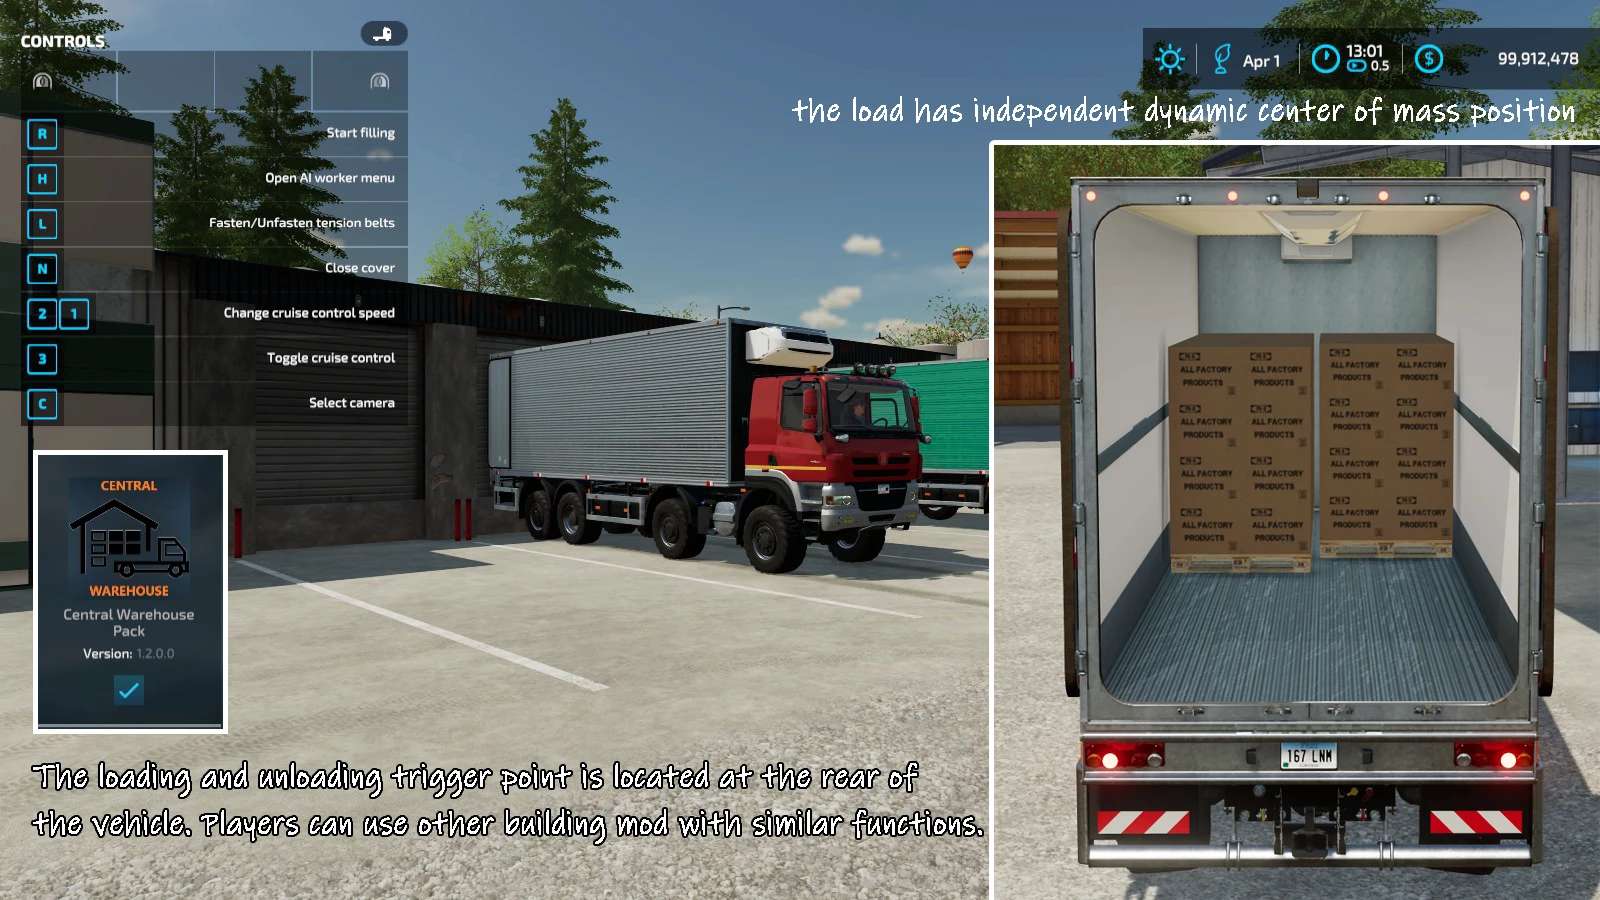 FS22: Sisu Polar Cassette v 1.0.0.0 Trucks Mod für Farming Simulator 22